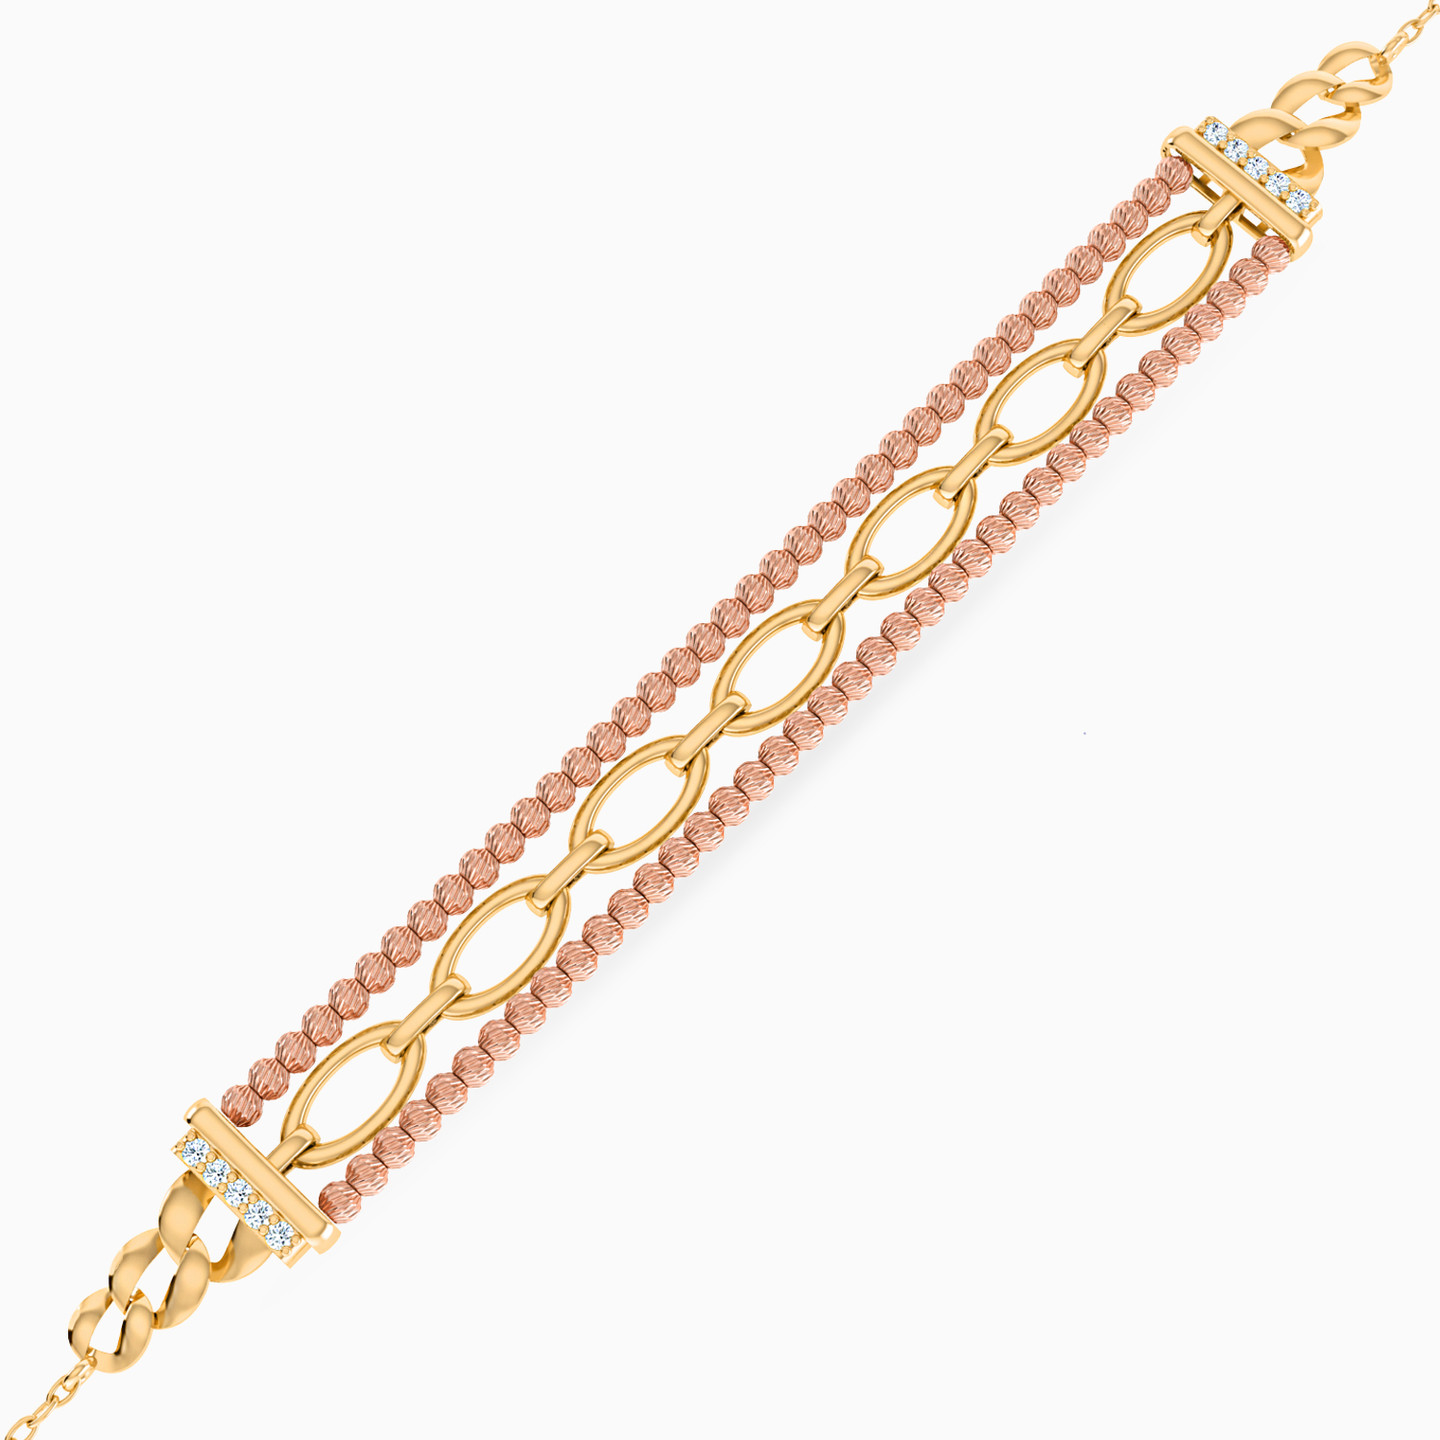 21K Gold Cubic Zirconia Chain Bracelet - 2